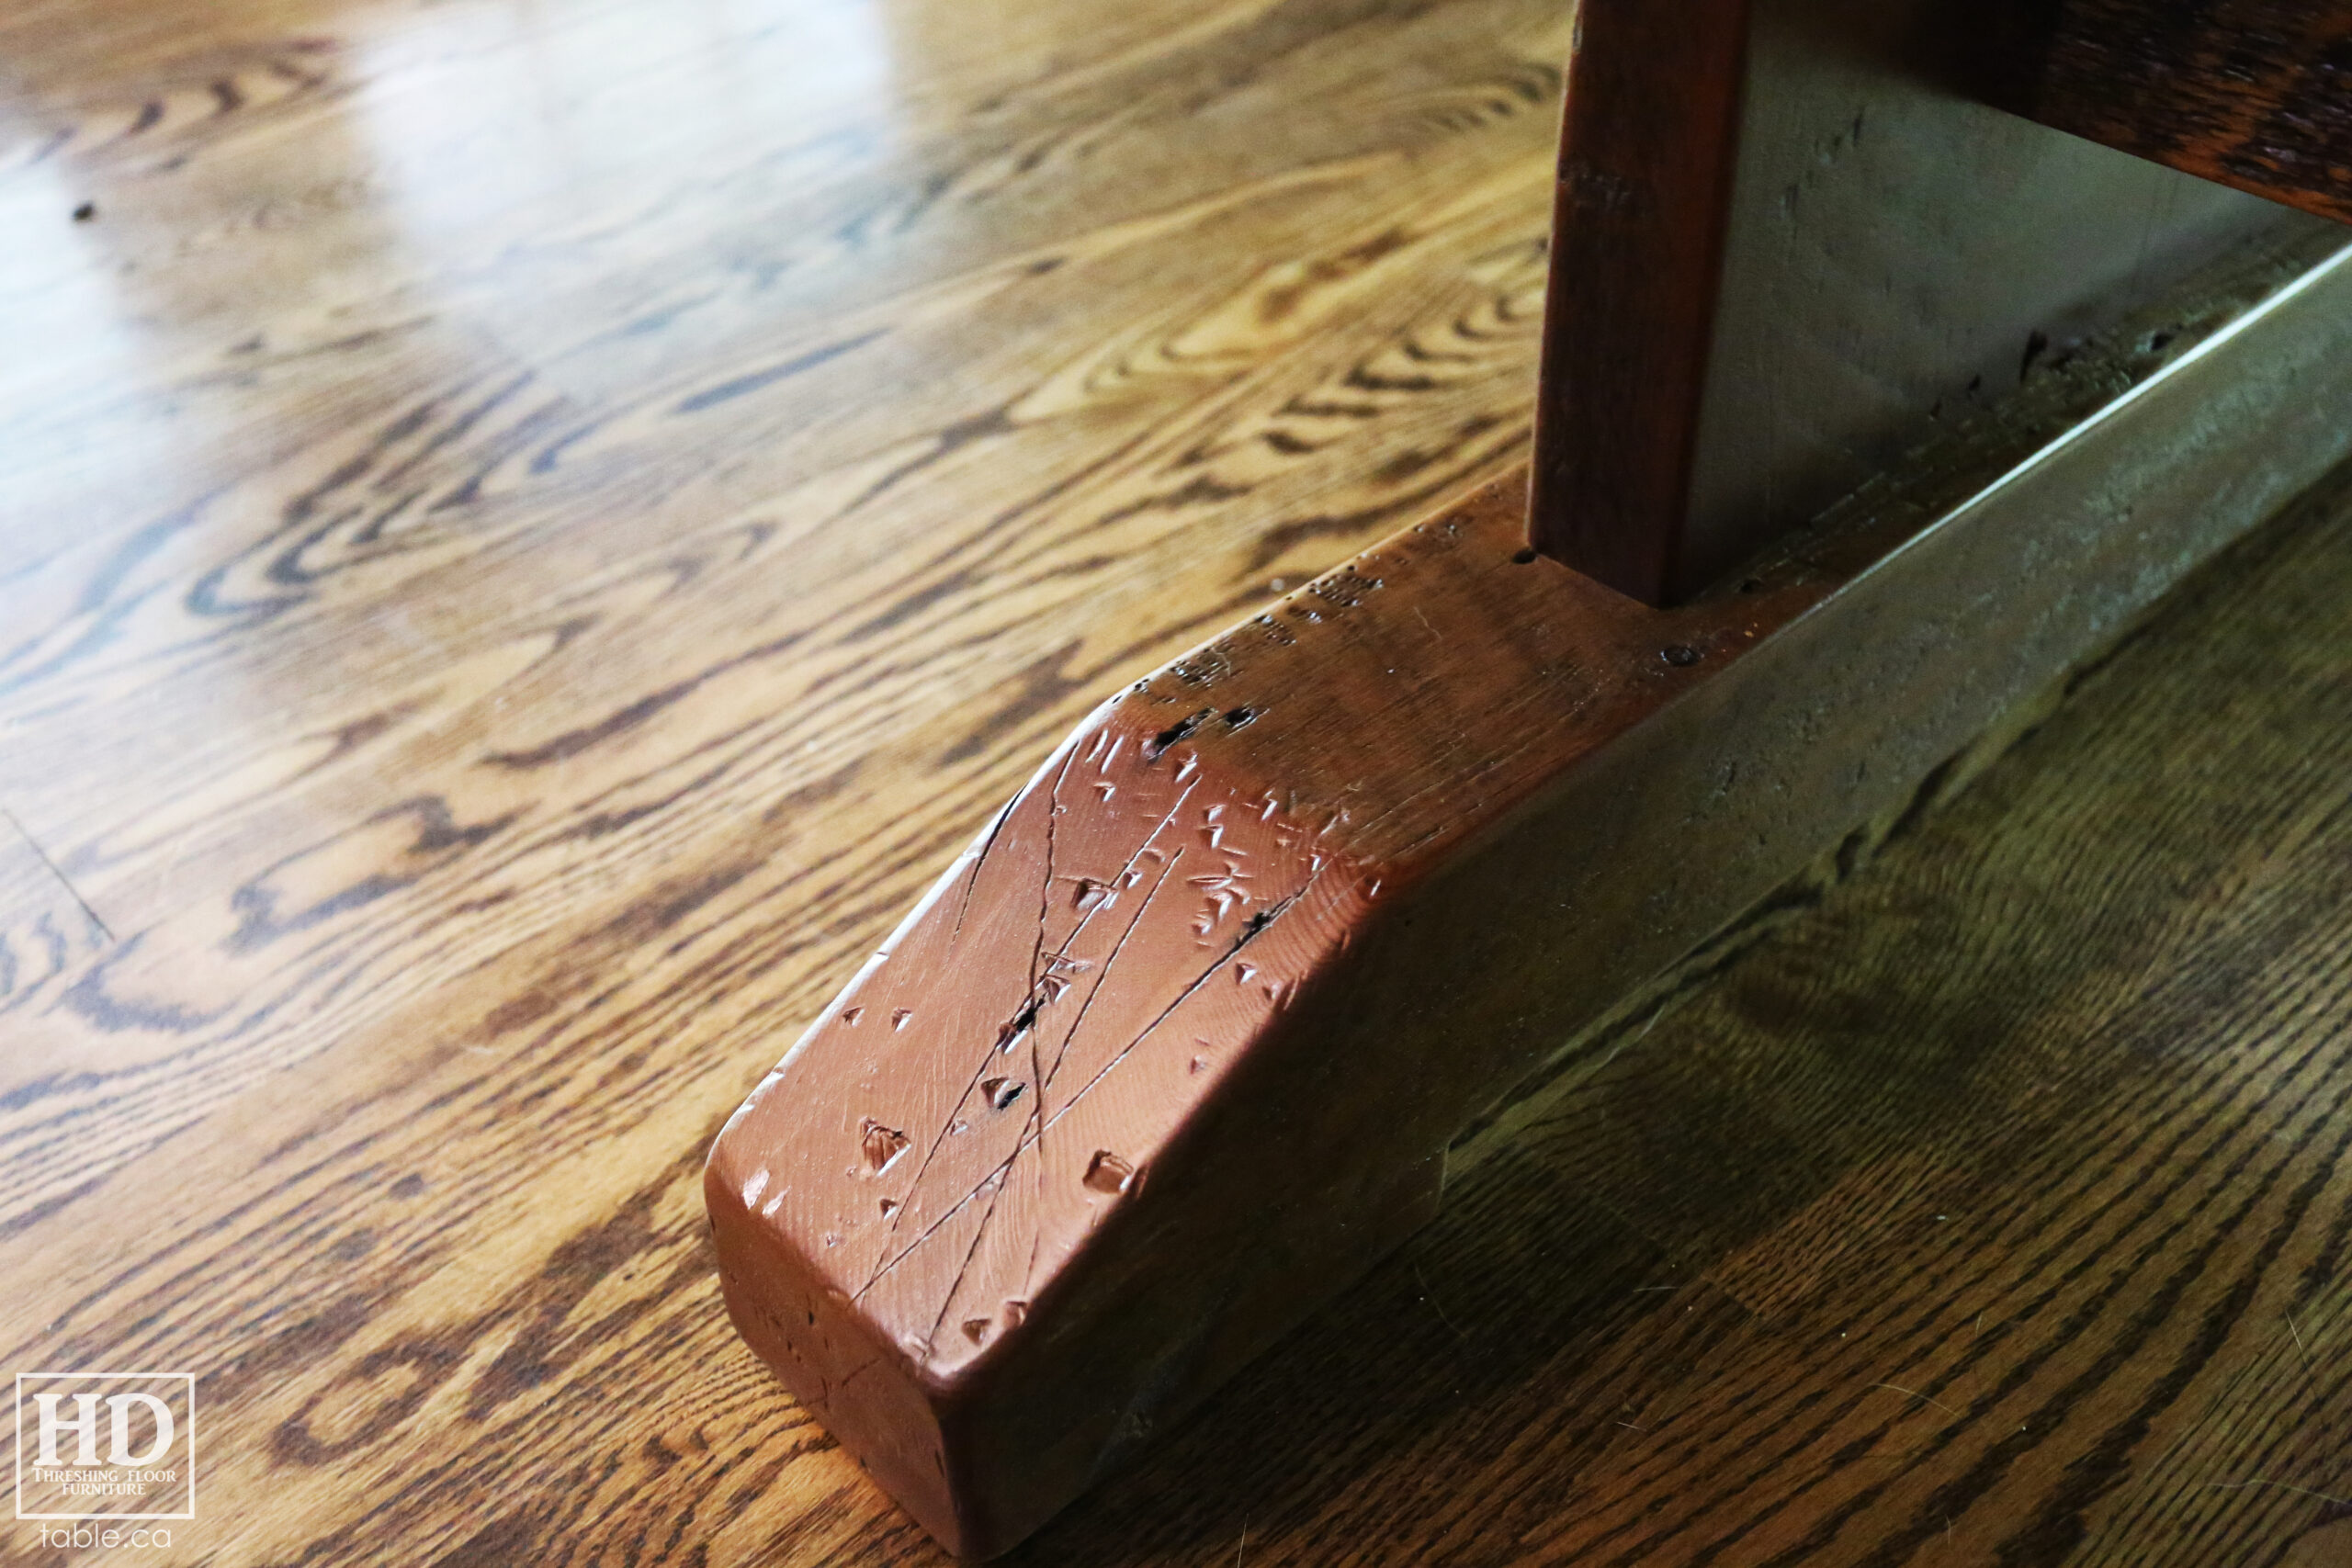 Heavy Duty Reclaimed Wood Table by HD Threshing Floor Furniture / Cambridge, Ontario / www.table.ca